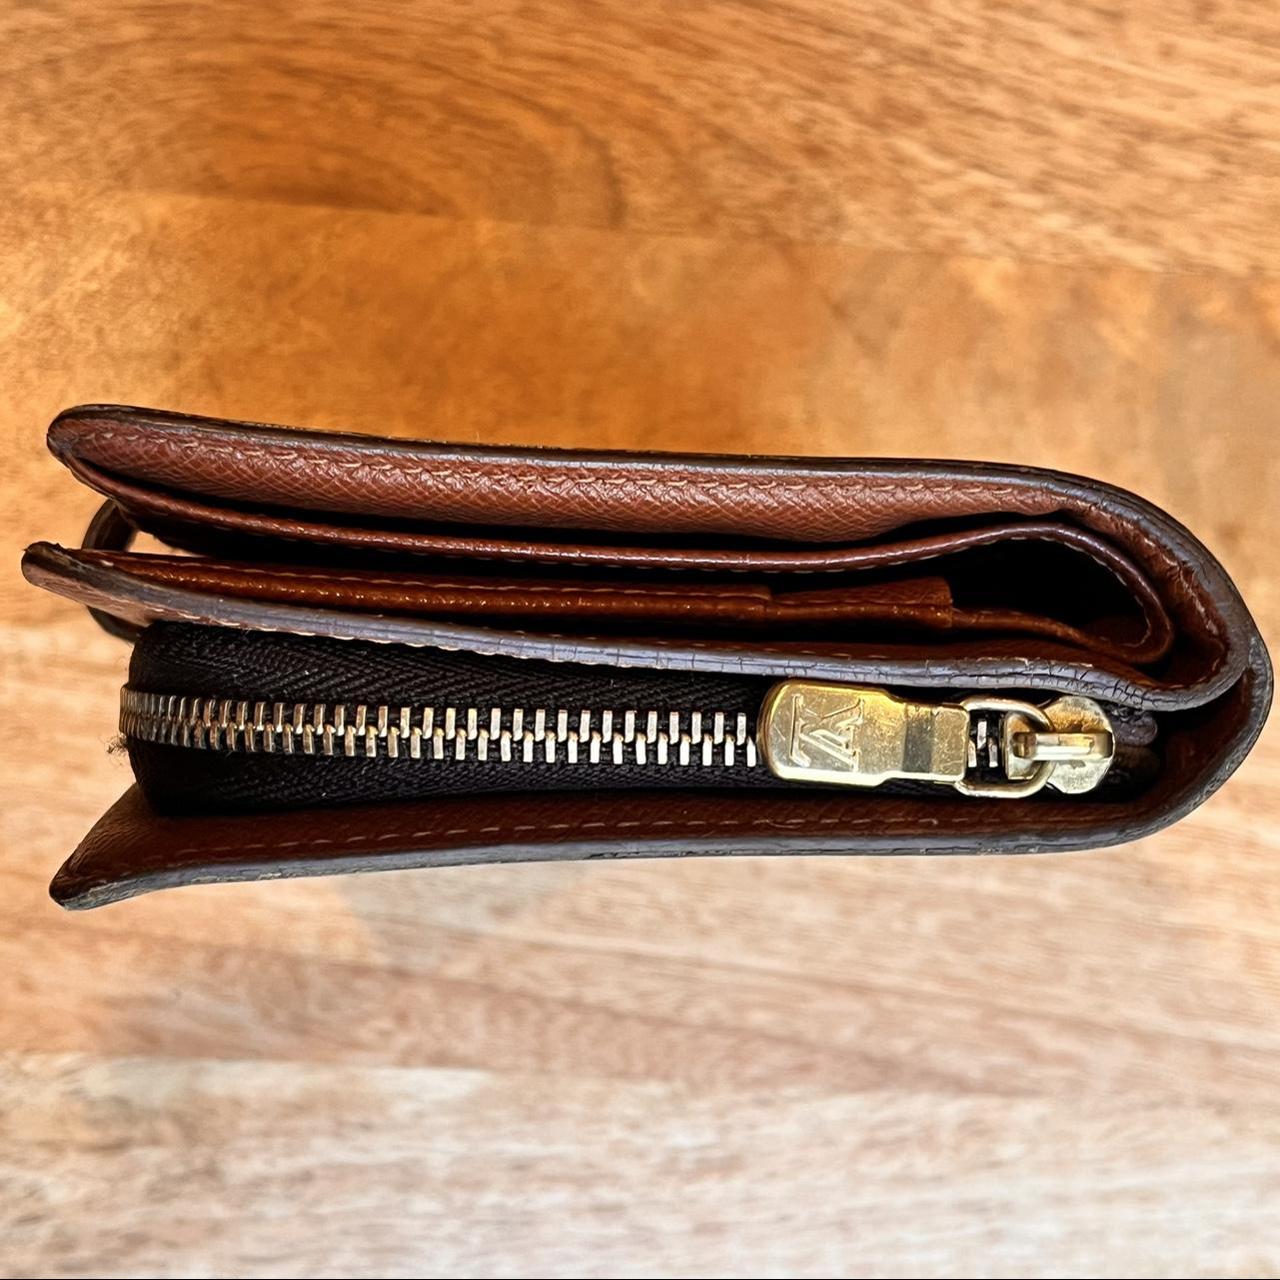 Louis Vuitton wallet -little wear on the stitching, - Depop